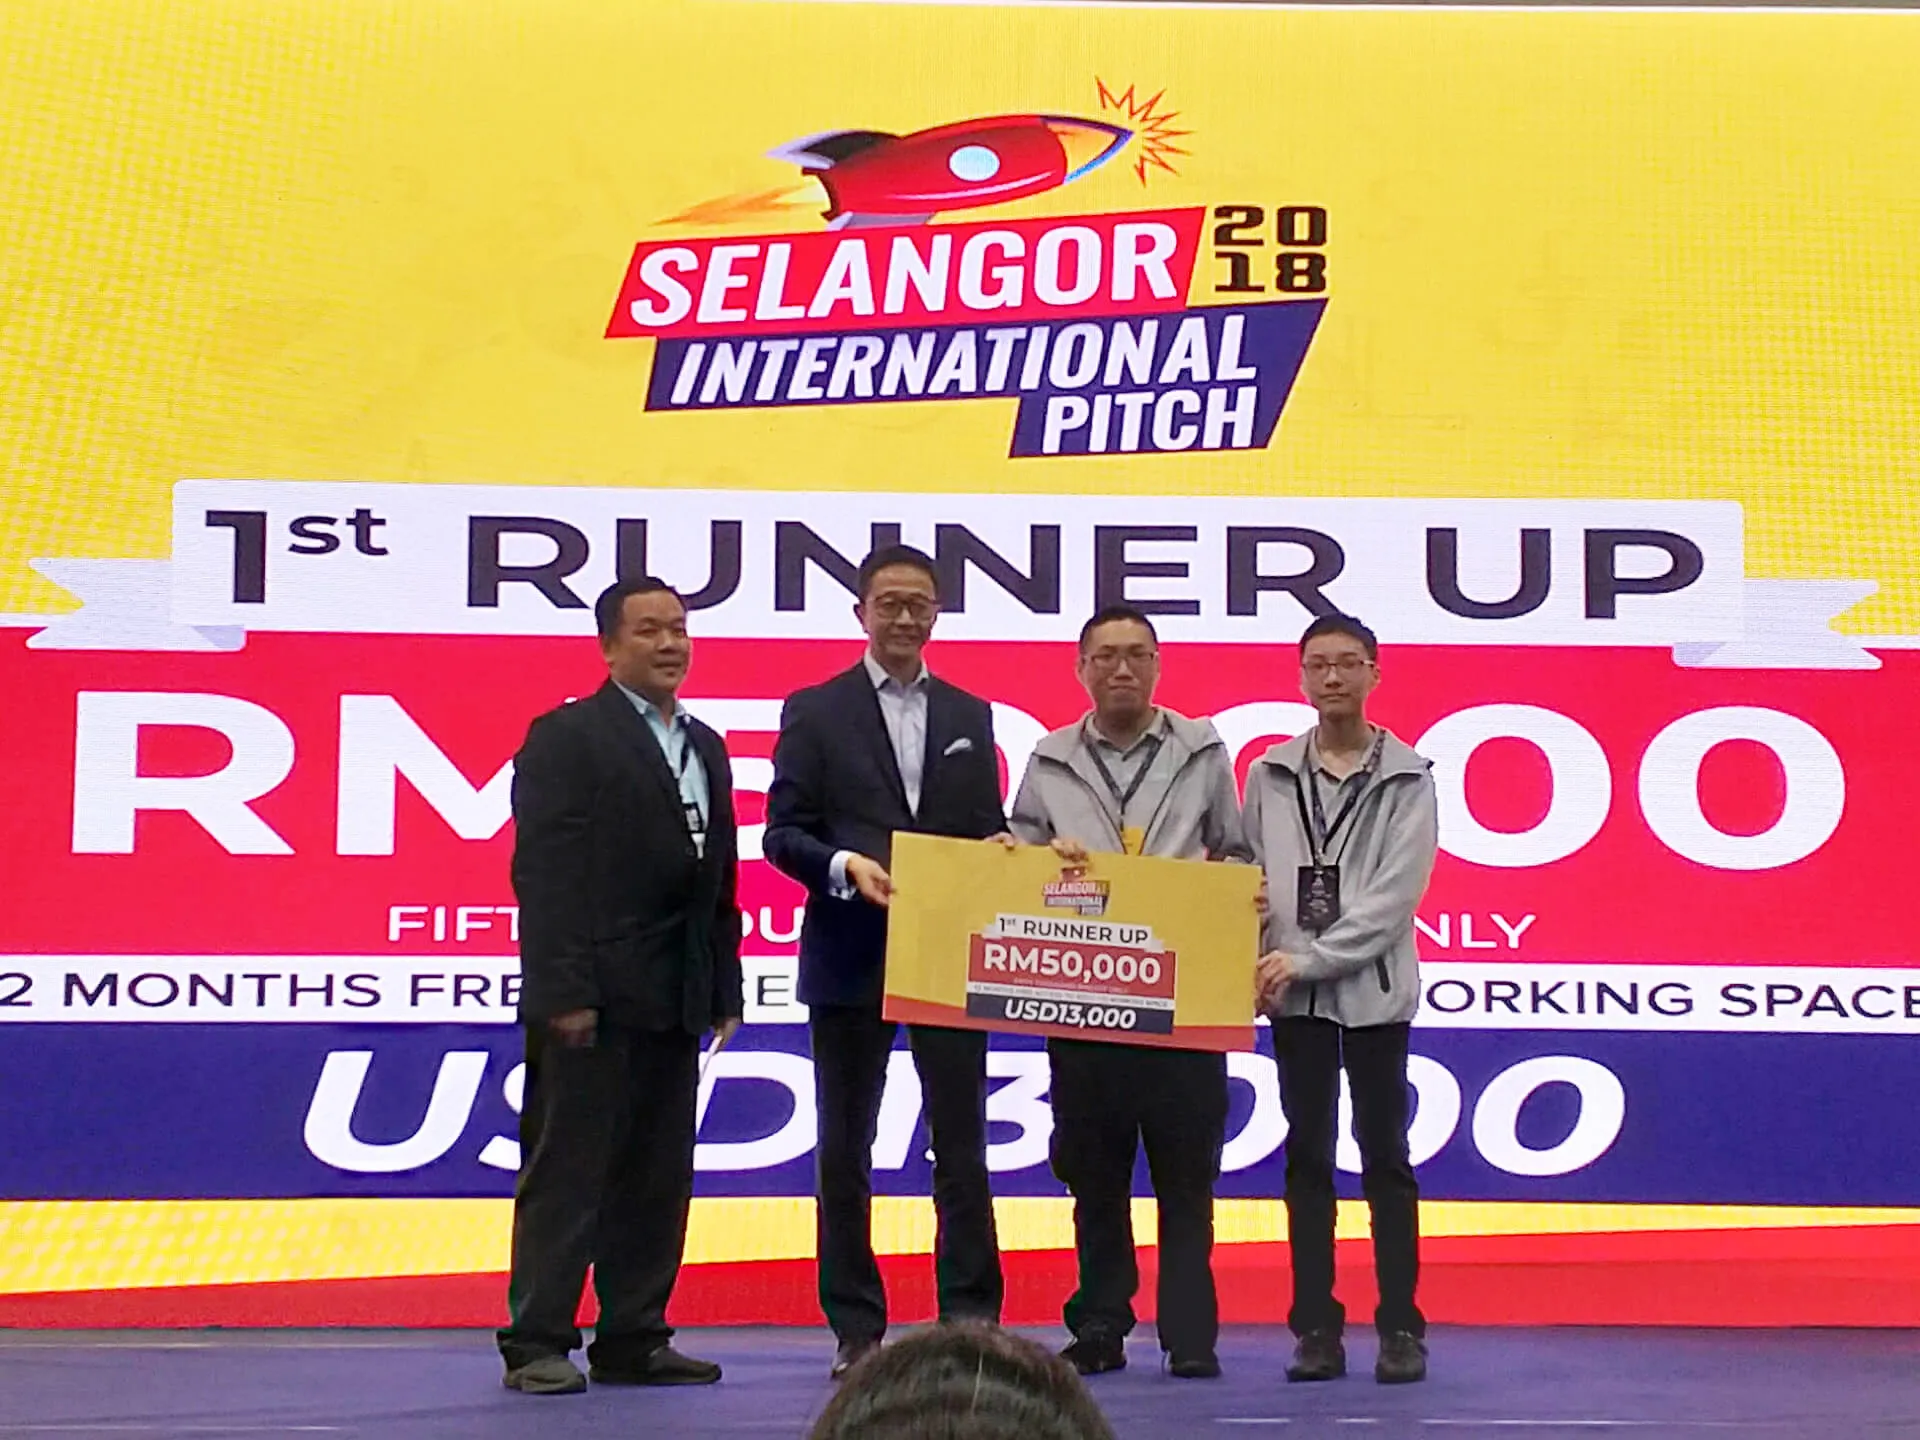 BAWA Cane wins big at Selangor International Pitch 2018